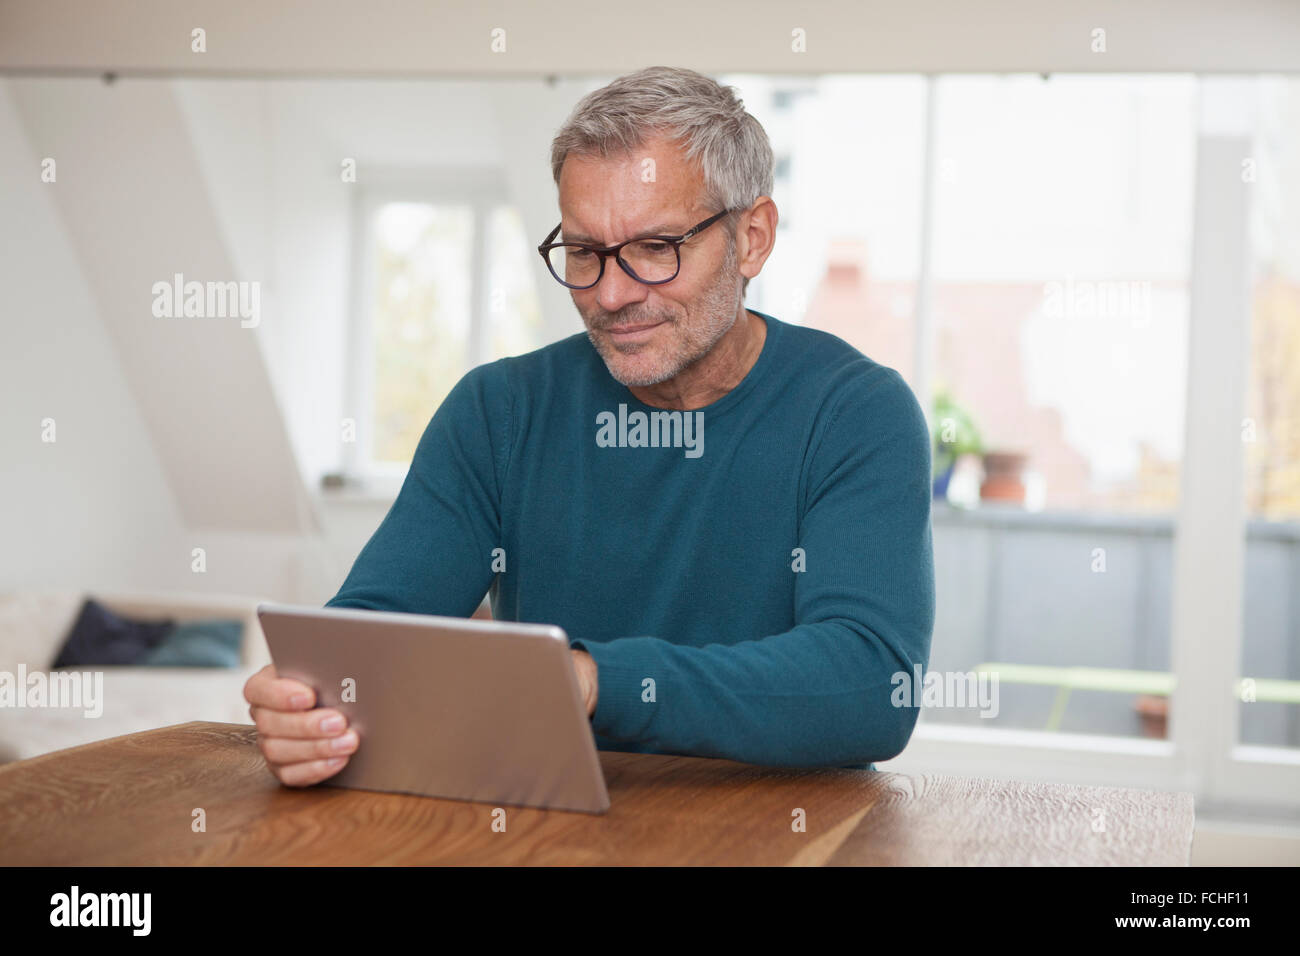 Man at home using digital tablet Banque D'Images